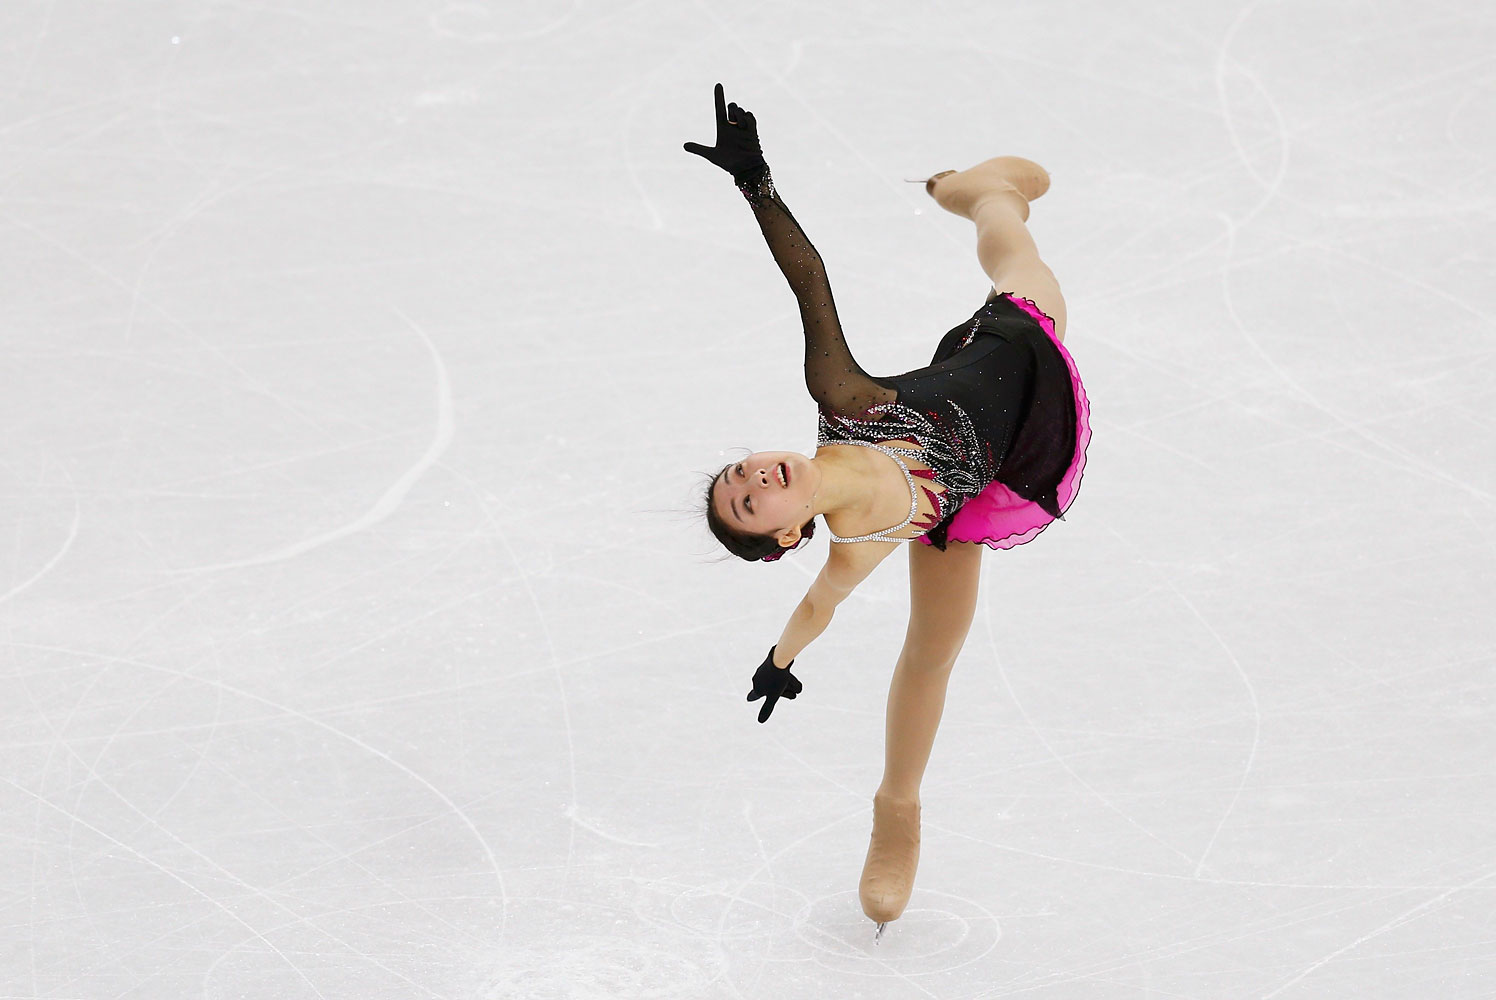 China's Zijun Li competes during the Figure Skating Women's Short Program at the Sochi 2014 Winter Olympics